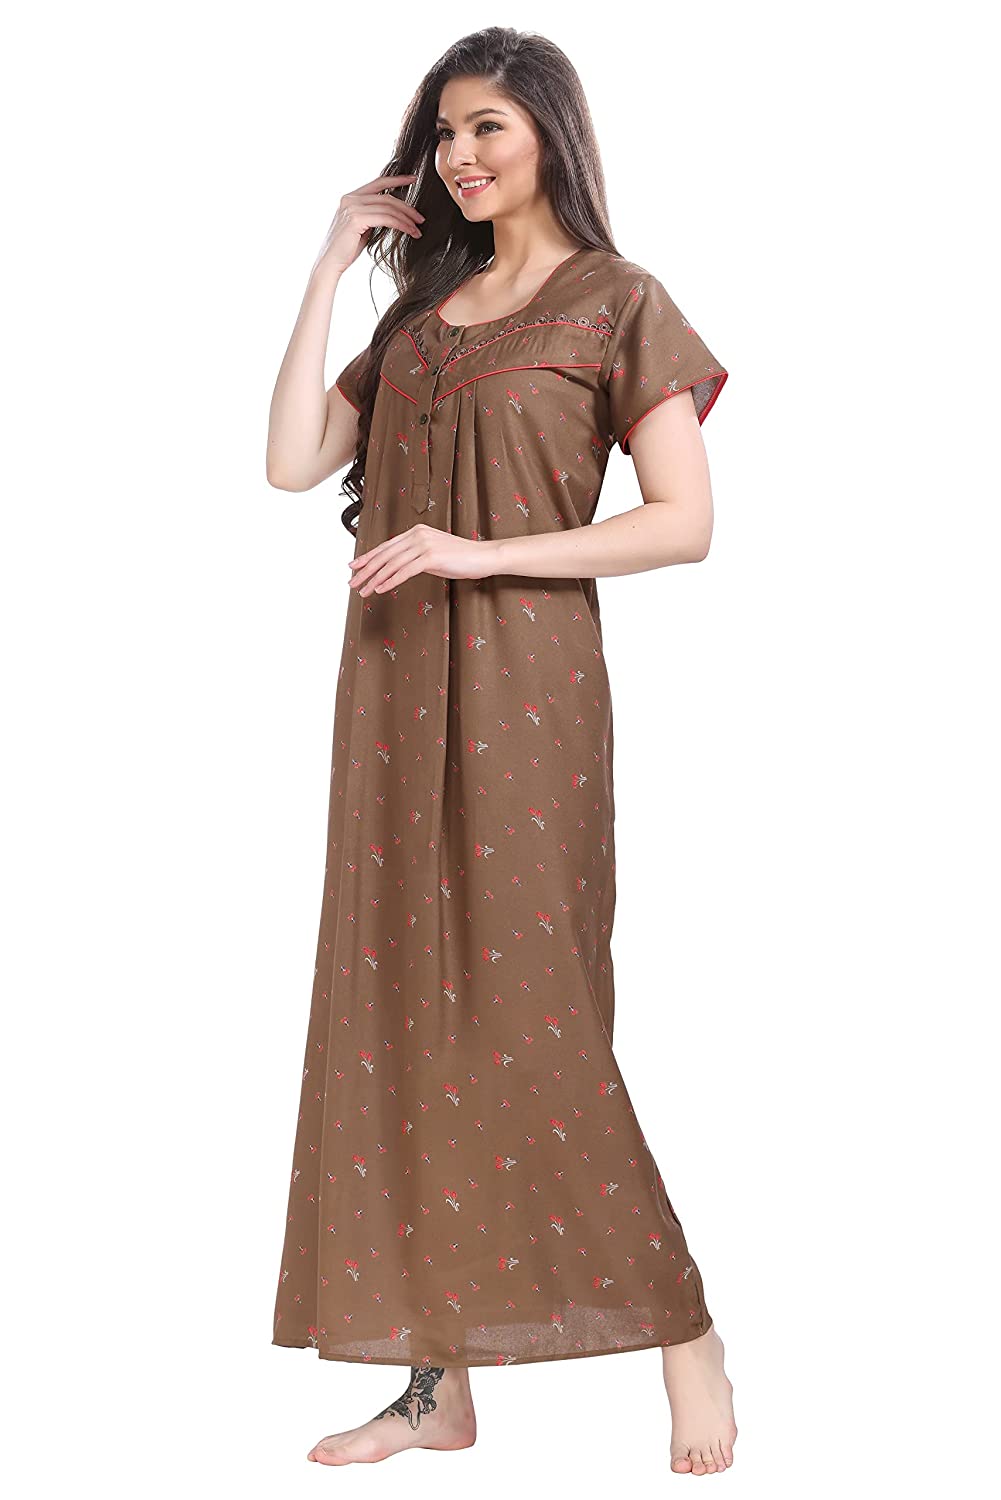 Satin Printed Kaftan Night Gown at Rs 130/piece | Satin Nightgown in Devli  | ID: 25890515388